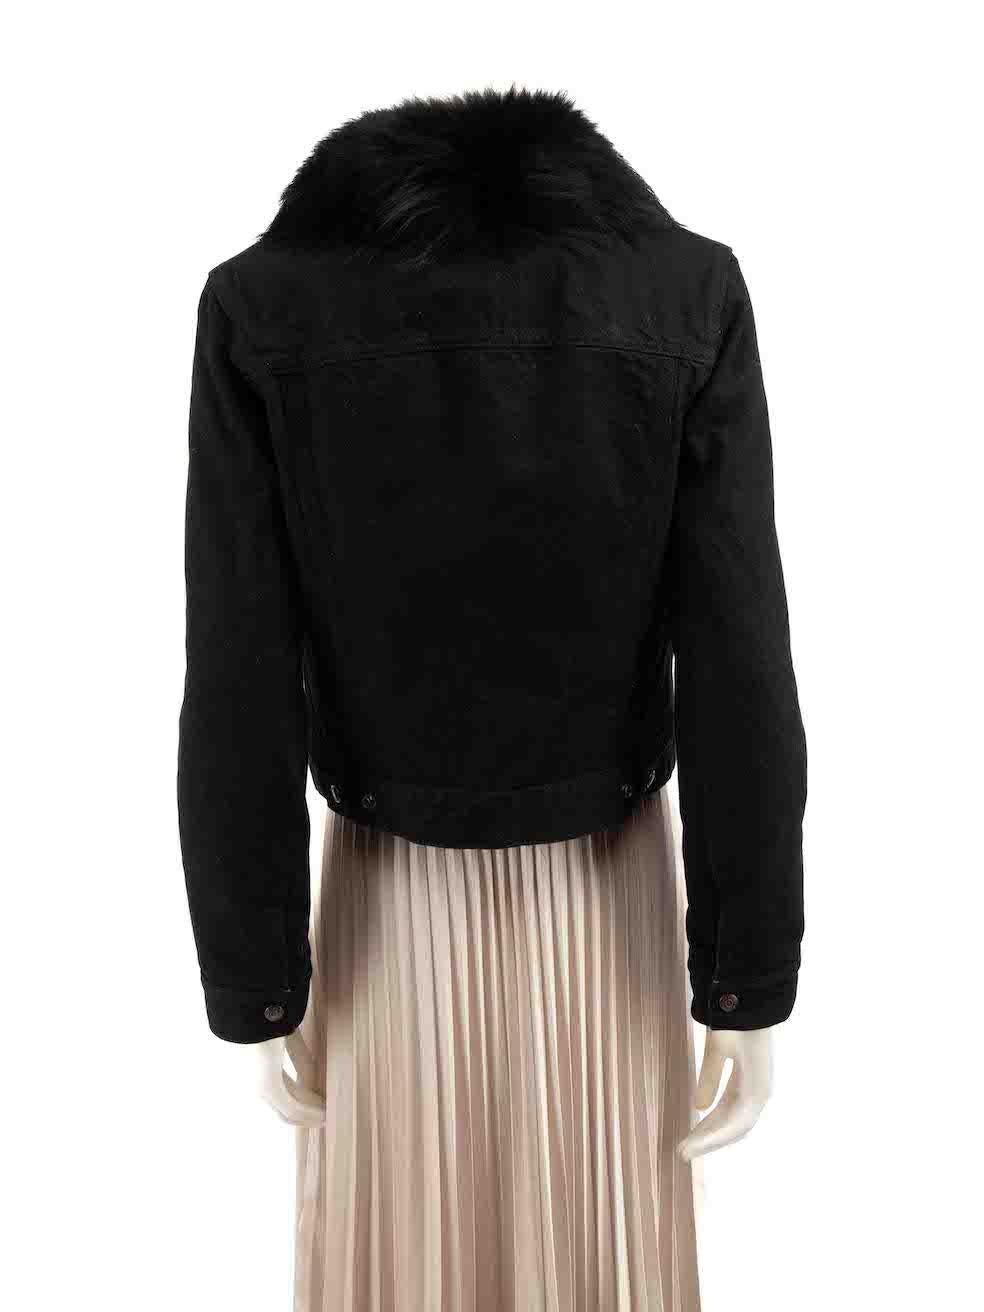 Saint Laurent Black Denim Faux Fur Trimmed Jacket Size M In Good Condition For Sale In London, GB